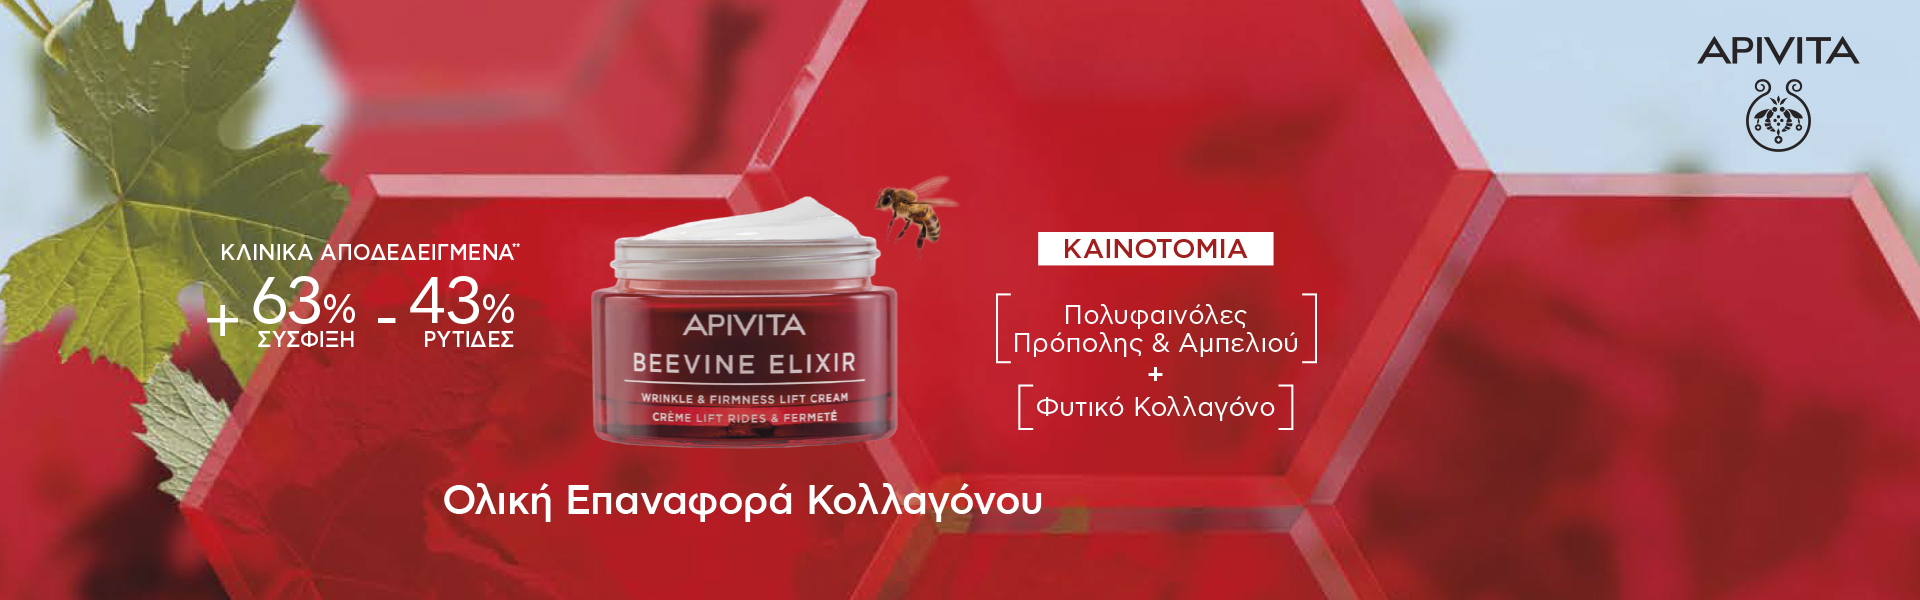 Apivita Beevine Elixir, επαναφορά του κολλαγόνου, σύσφιξη & ελαστικότητα.